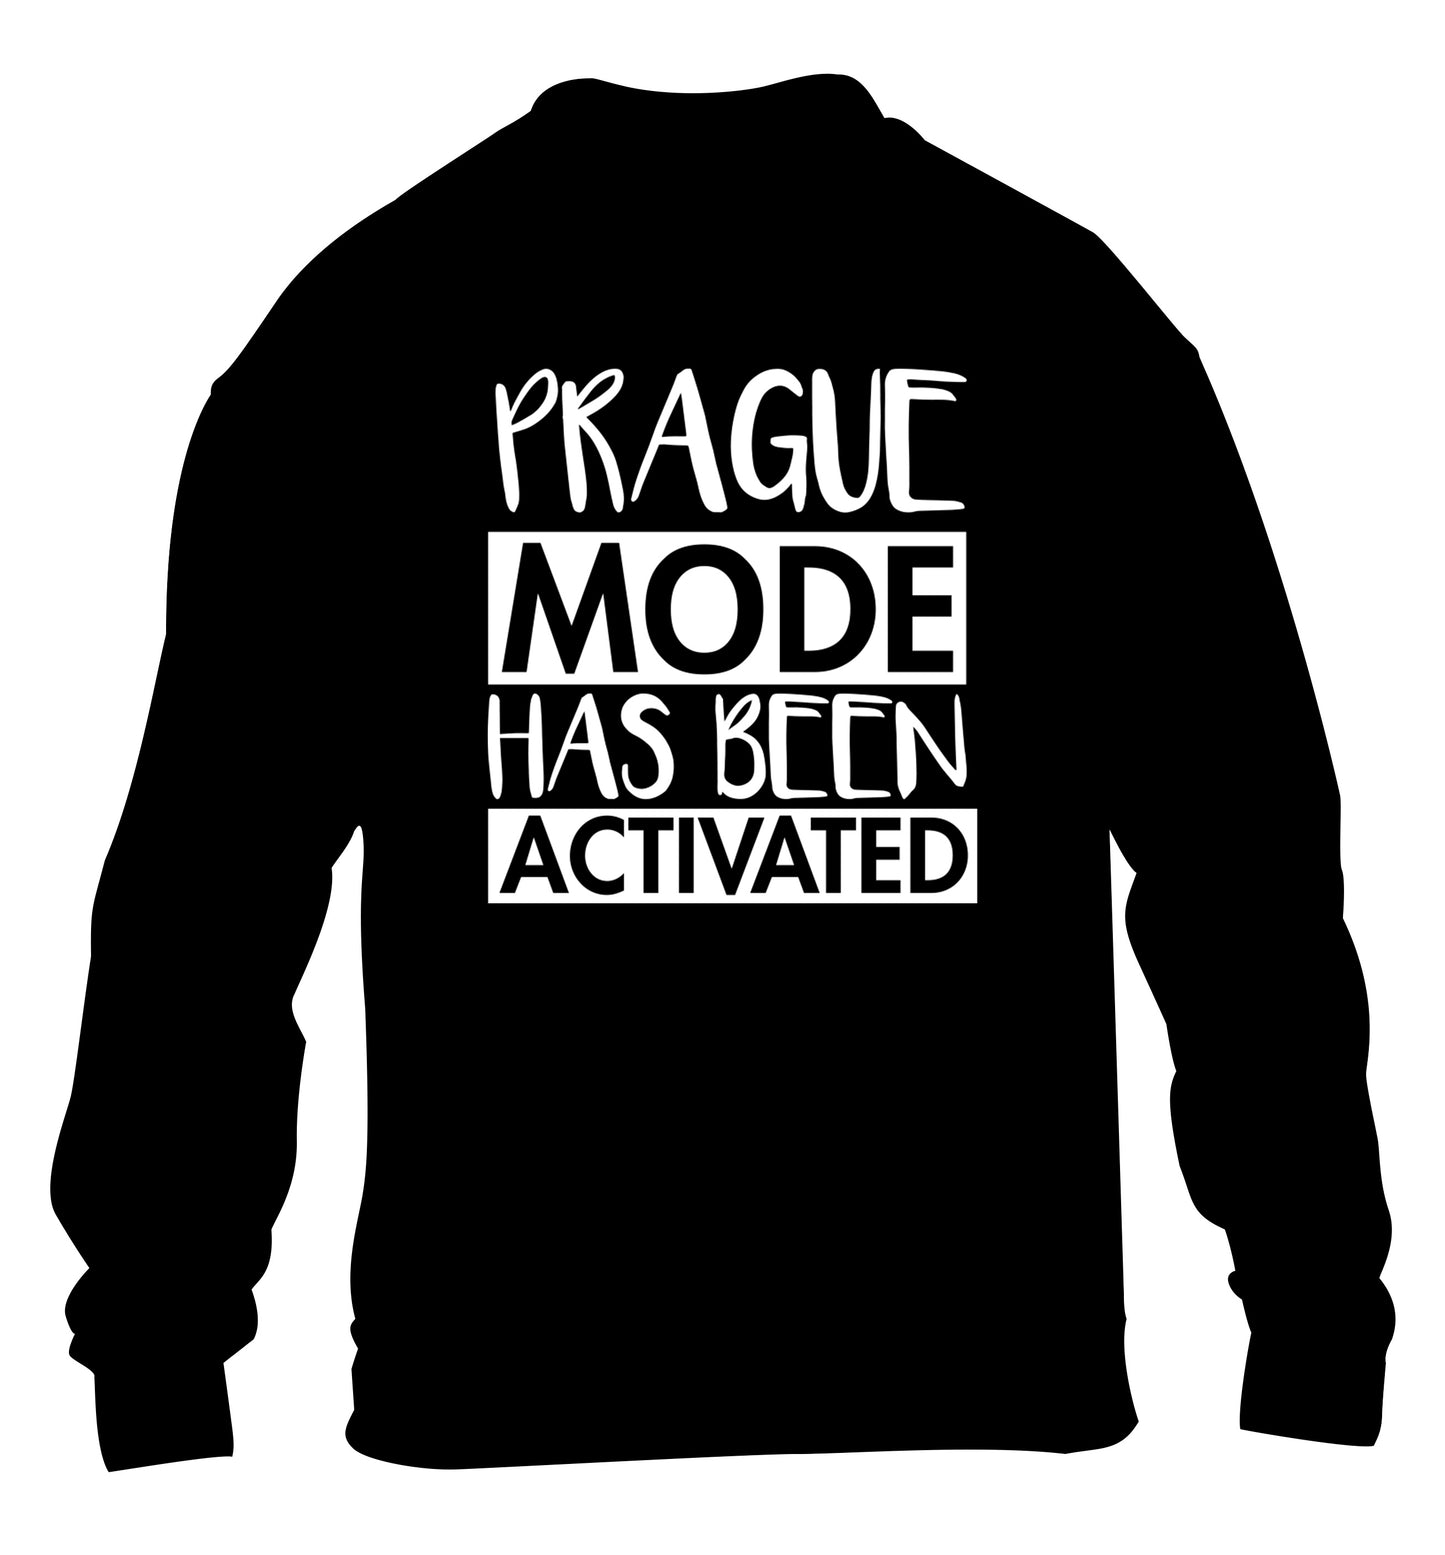 Prague mode has been activated children's black sweater 12-13 Years